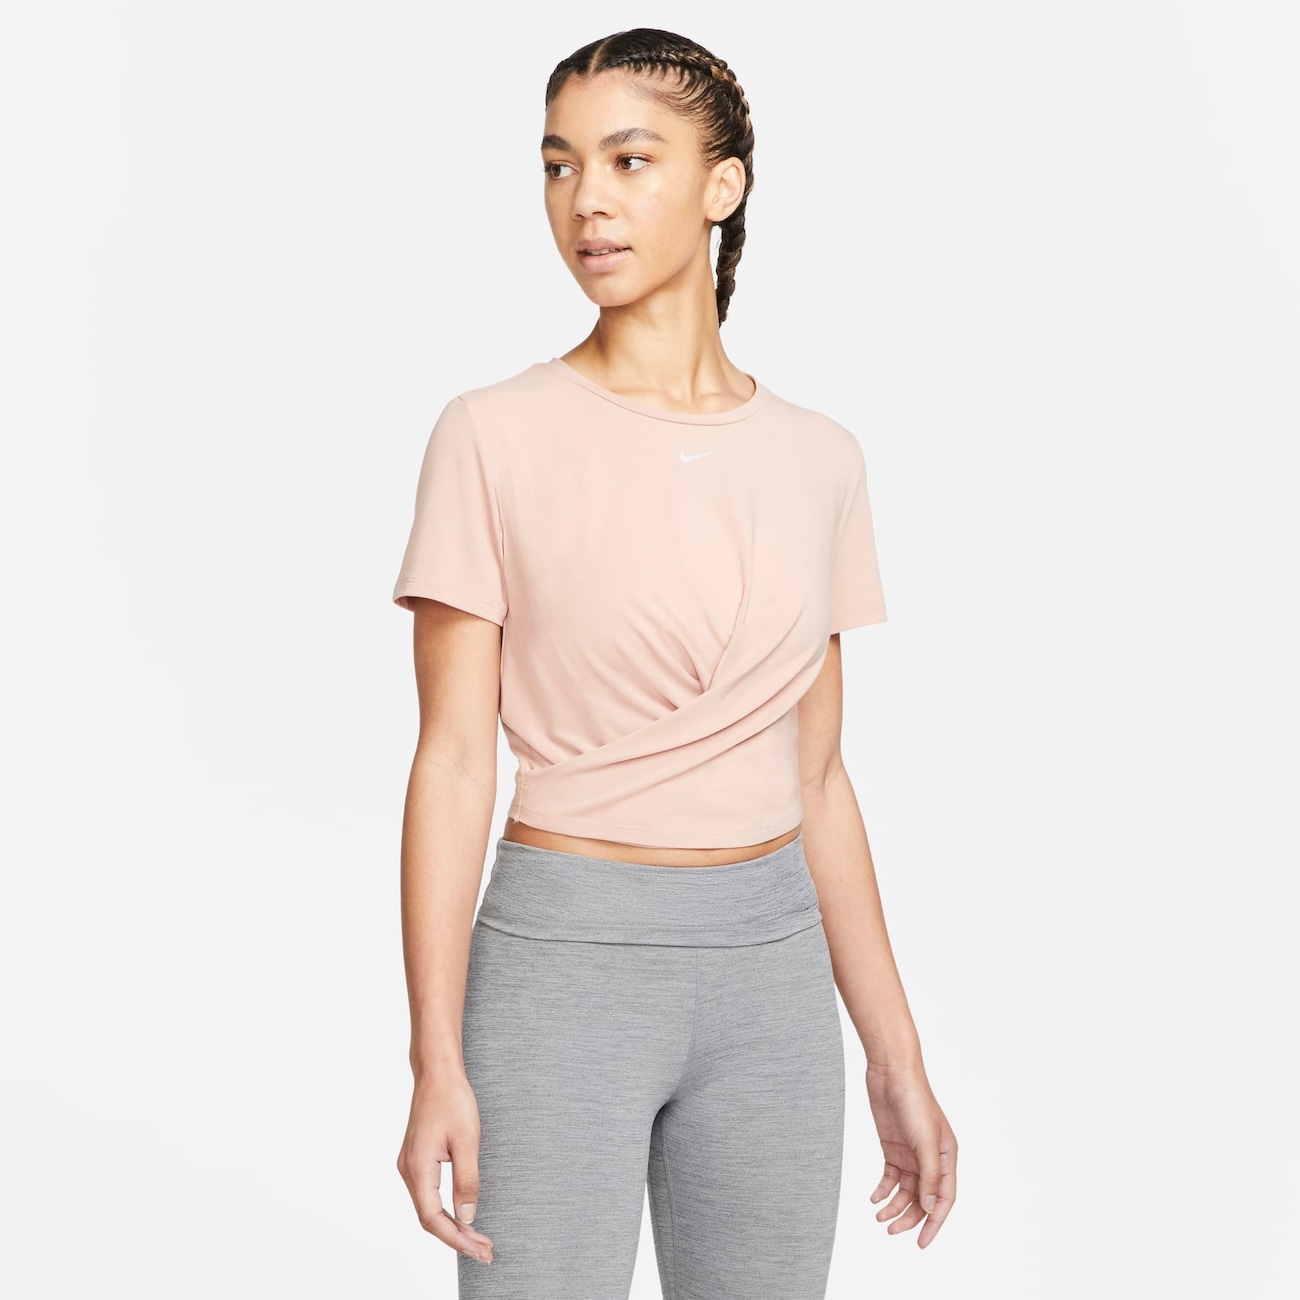 Camiseta Nike Feminina Dri-FIT One Luxe M - Roma Shopping - Seu